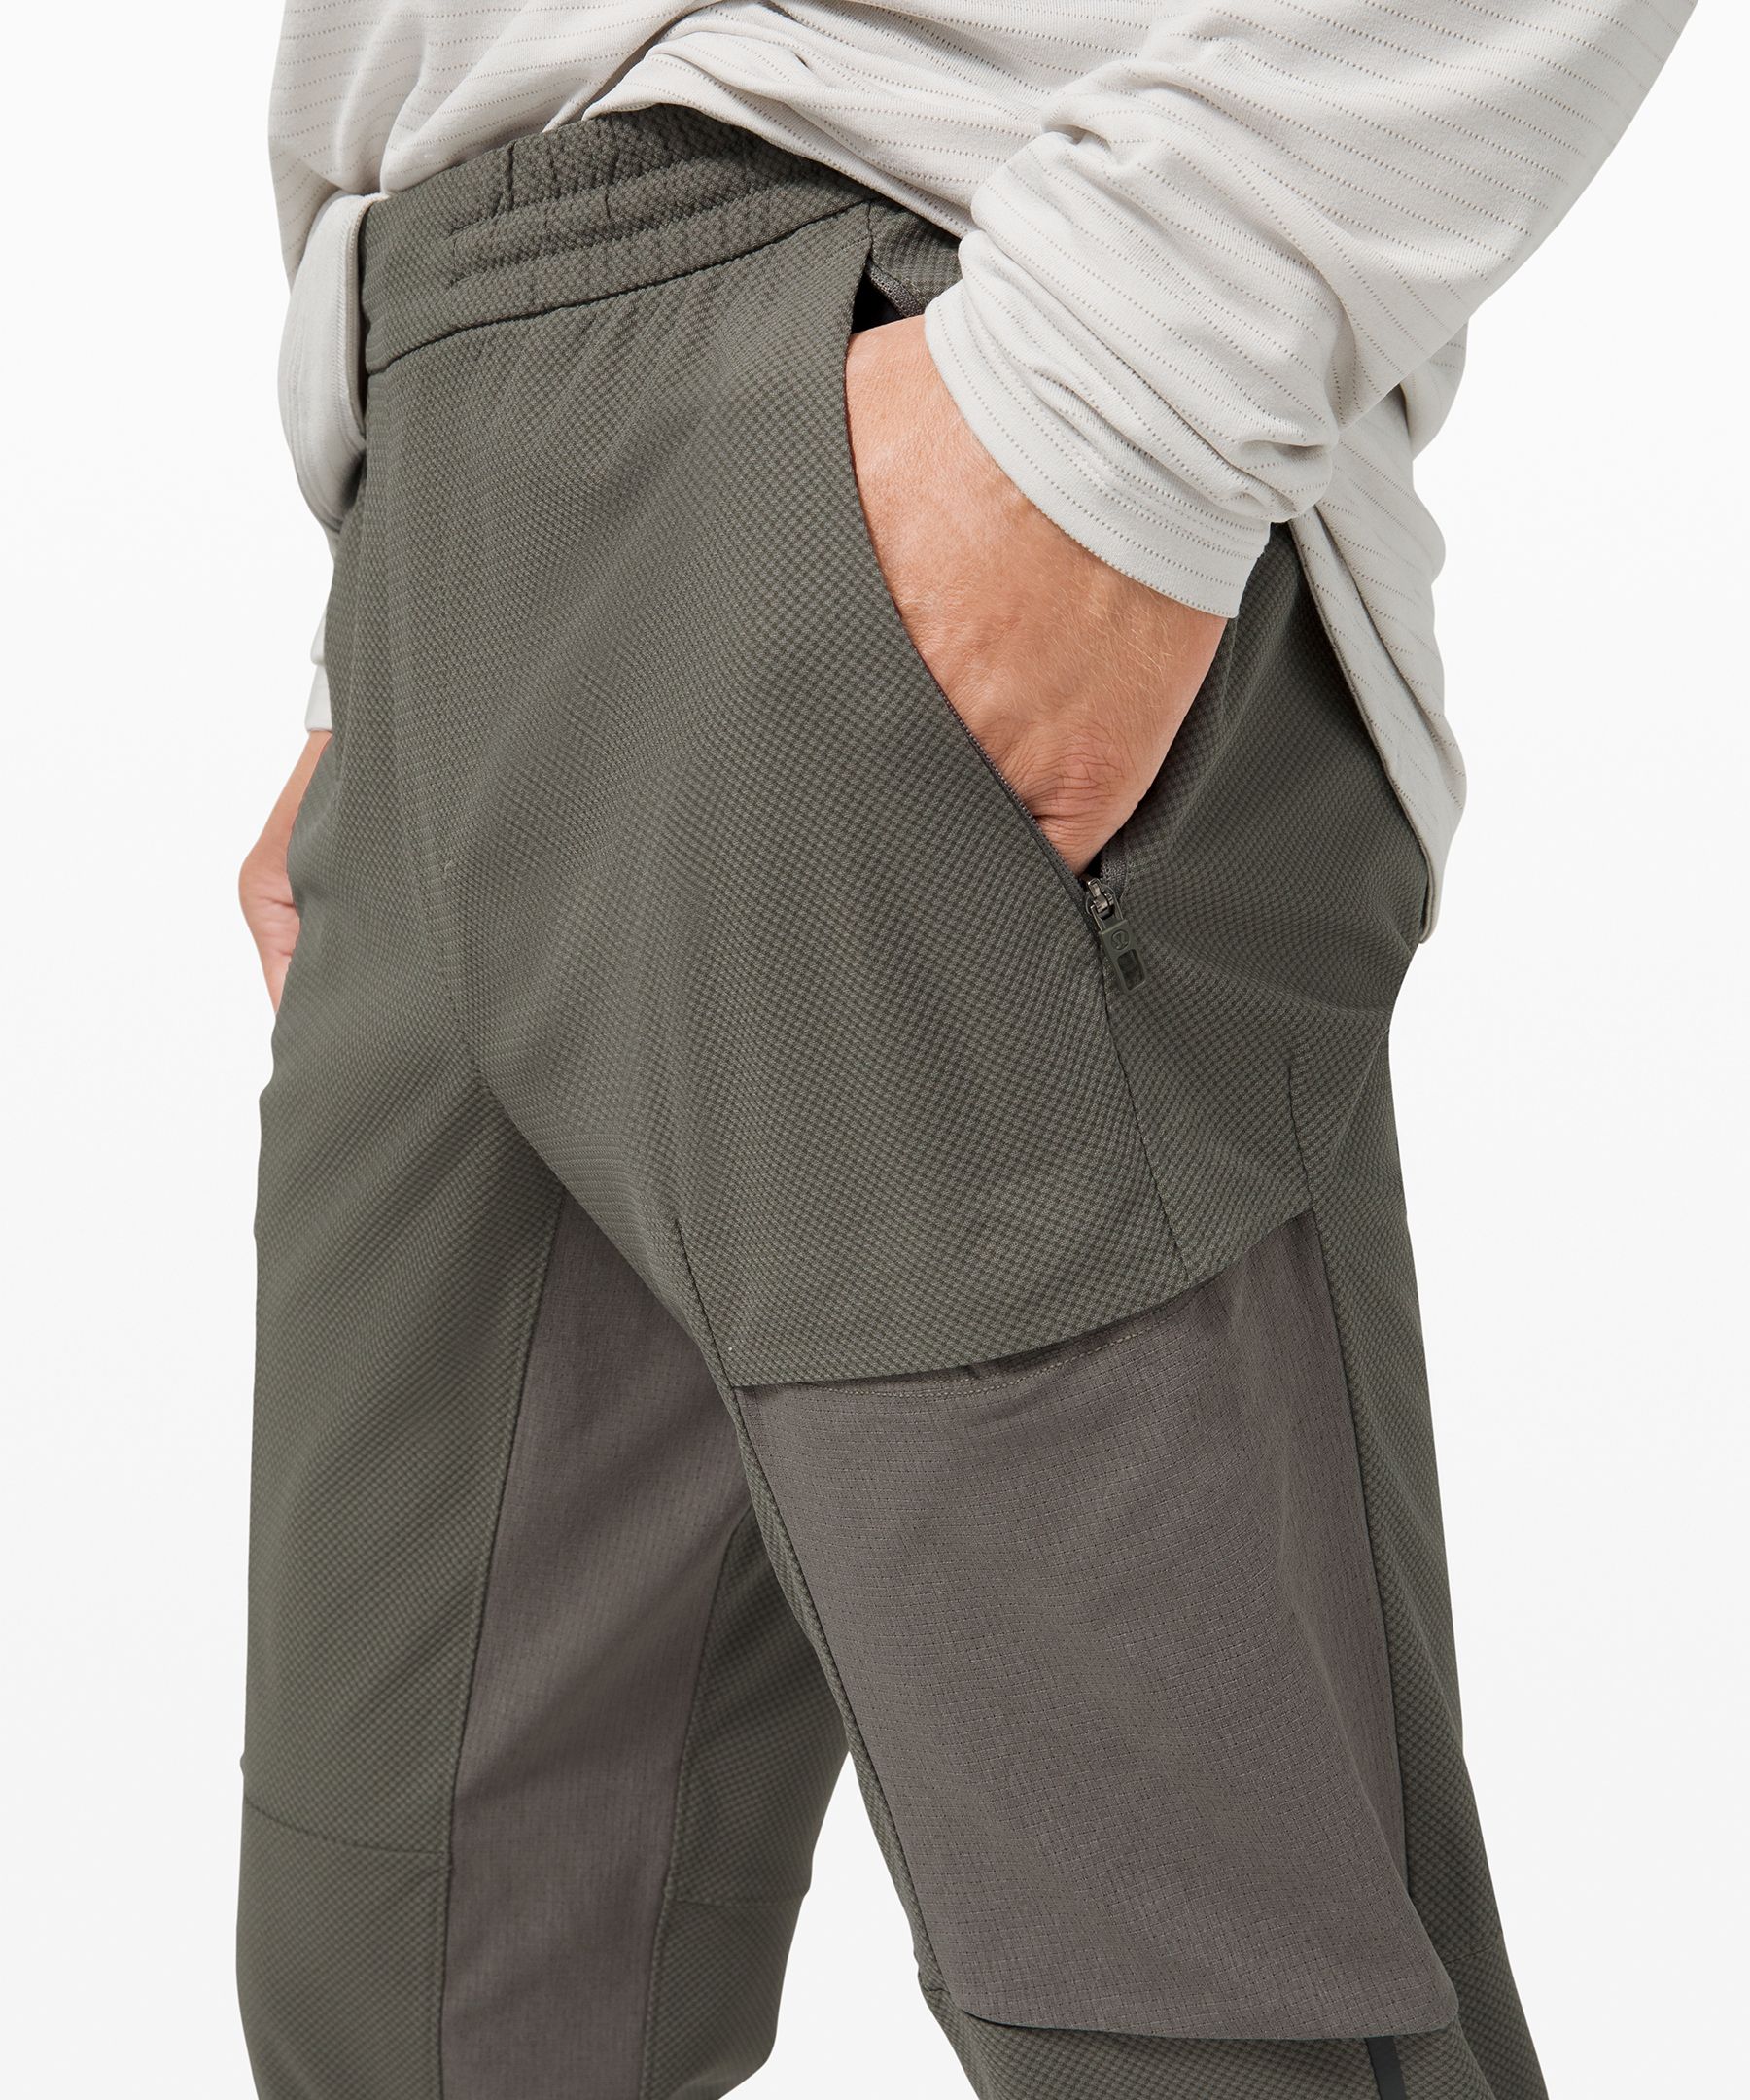 Lululemon Engineered Cargo Pants For Women Over 50